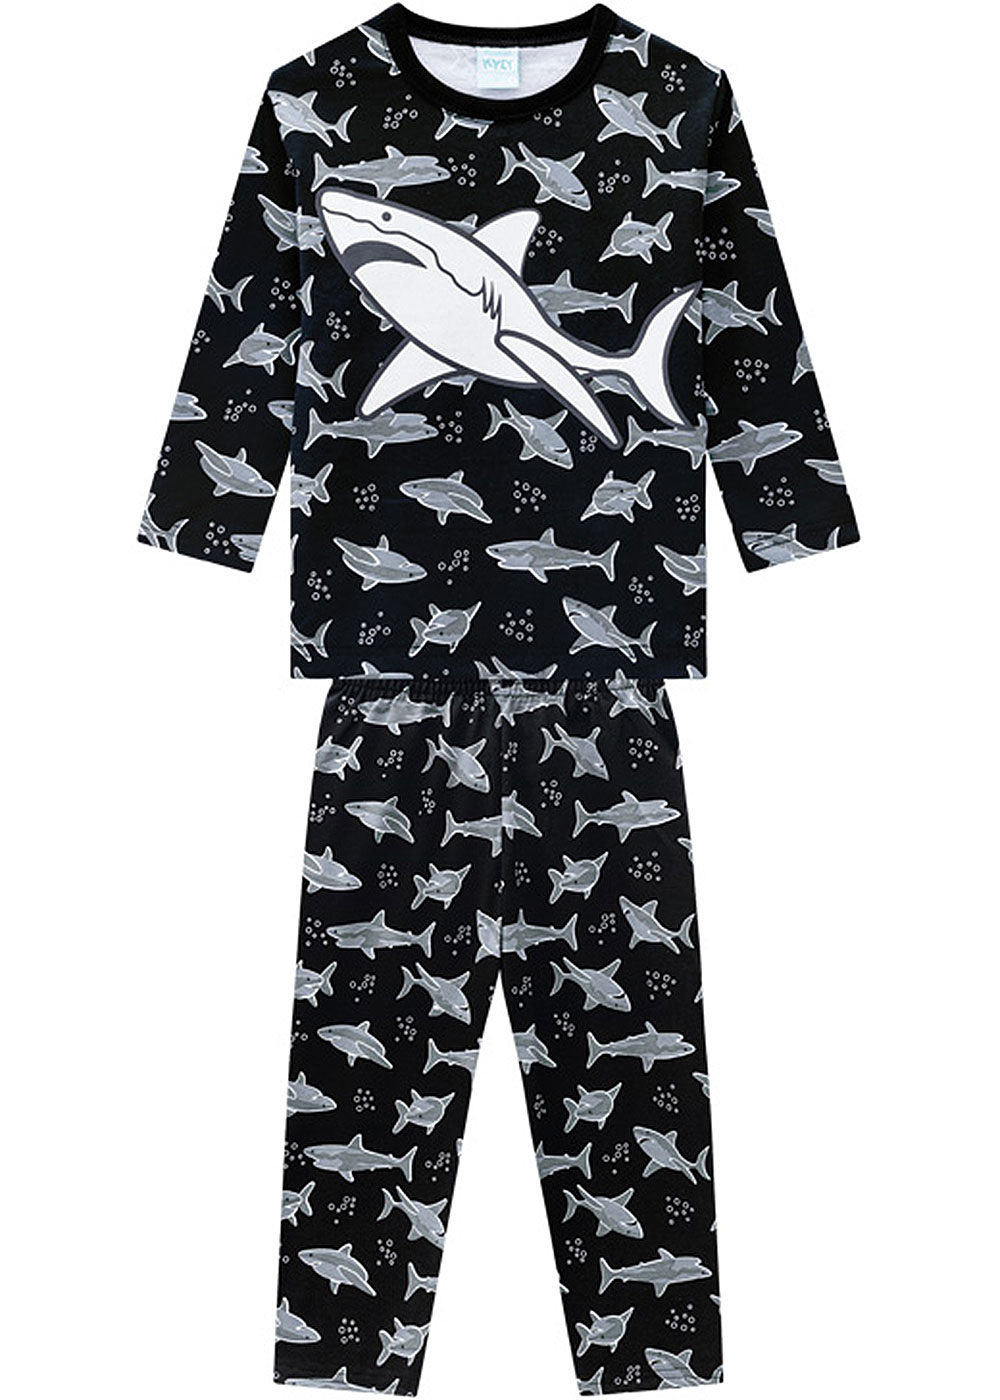 Pijama Infantil Masculino Inverno Preto Shark Brilha no Escuro - Kyly